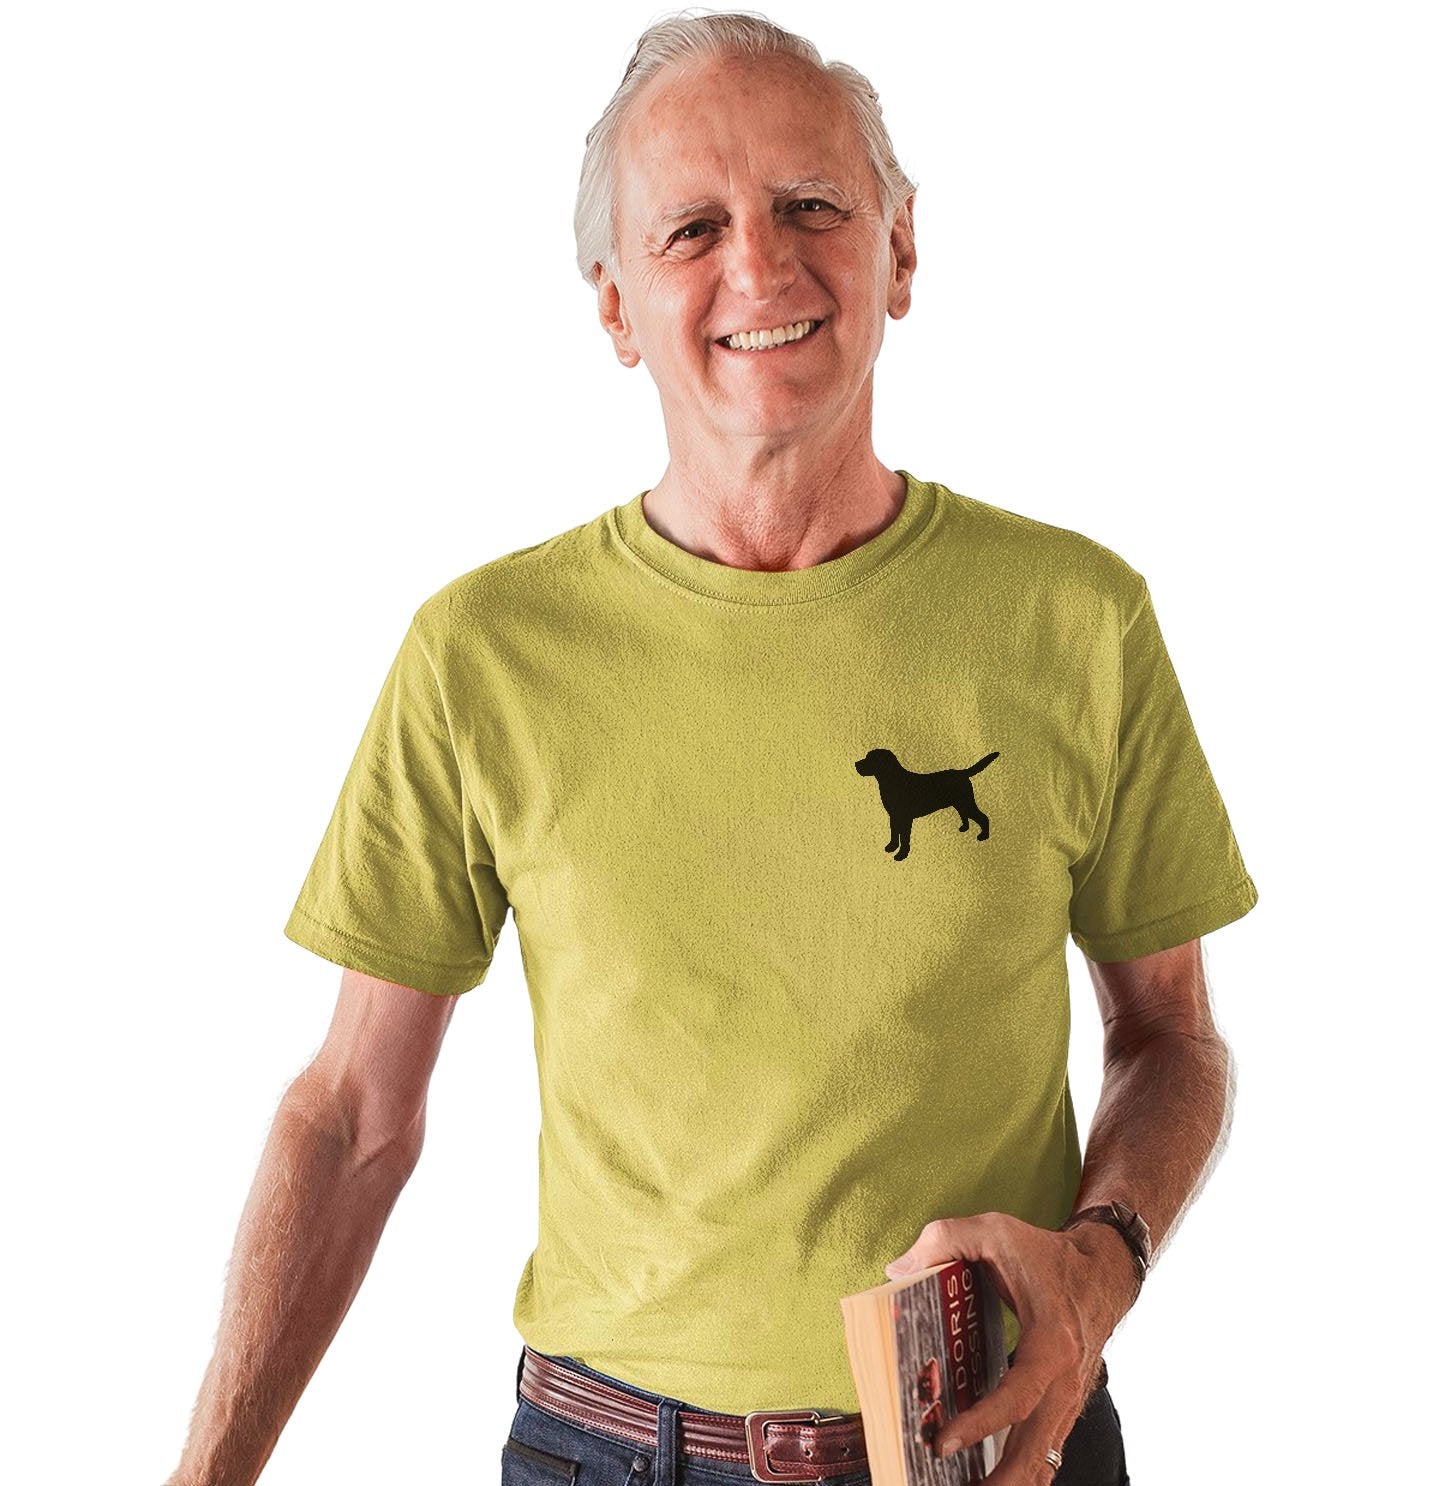 Labrador Silhouette Small - Adult Unisex T-Shirt